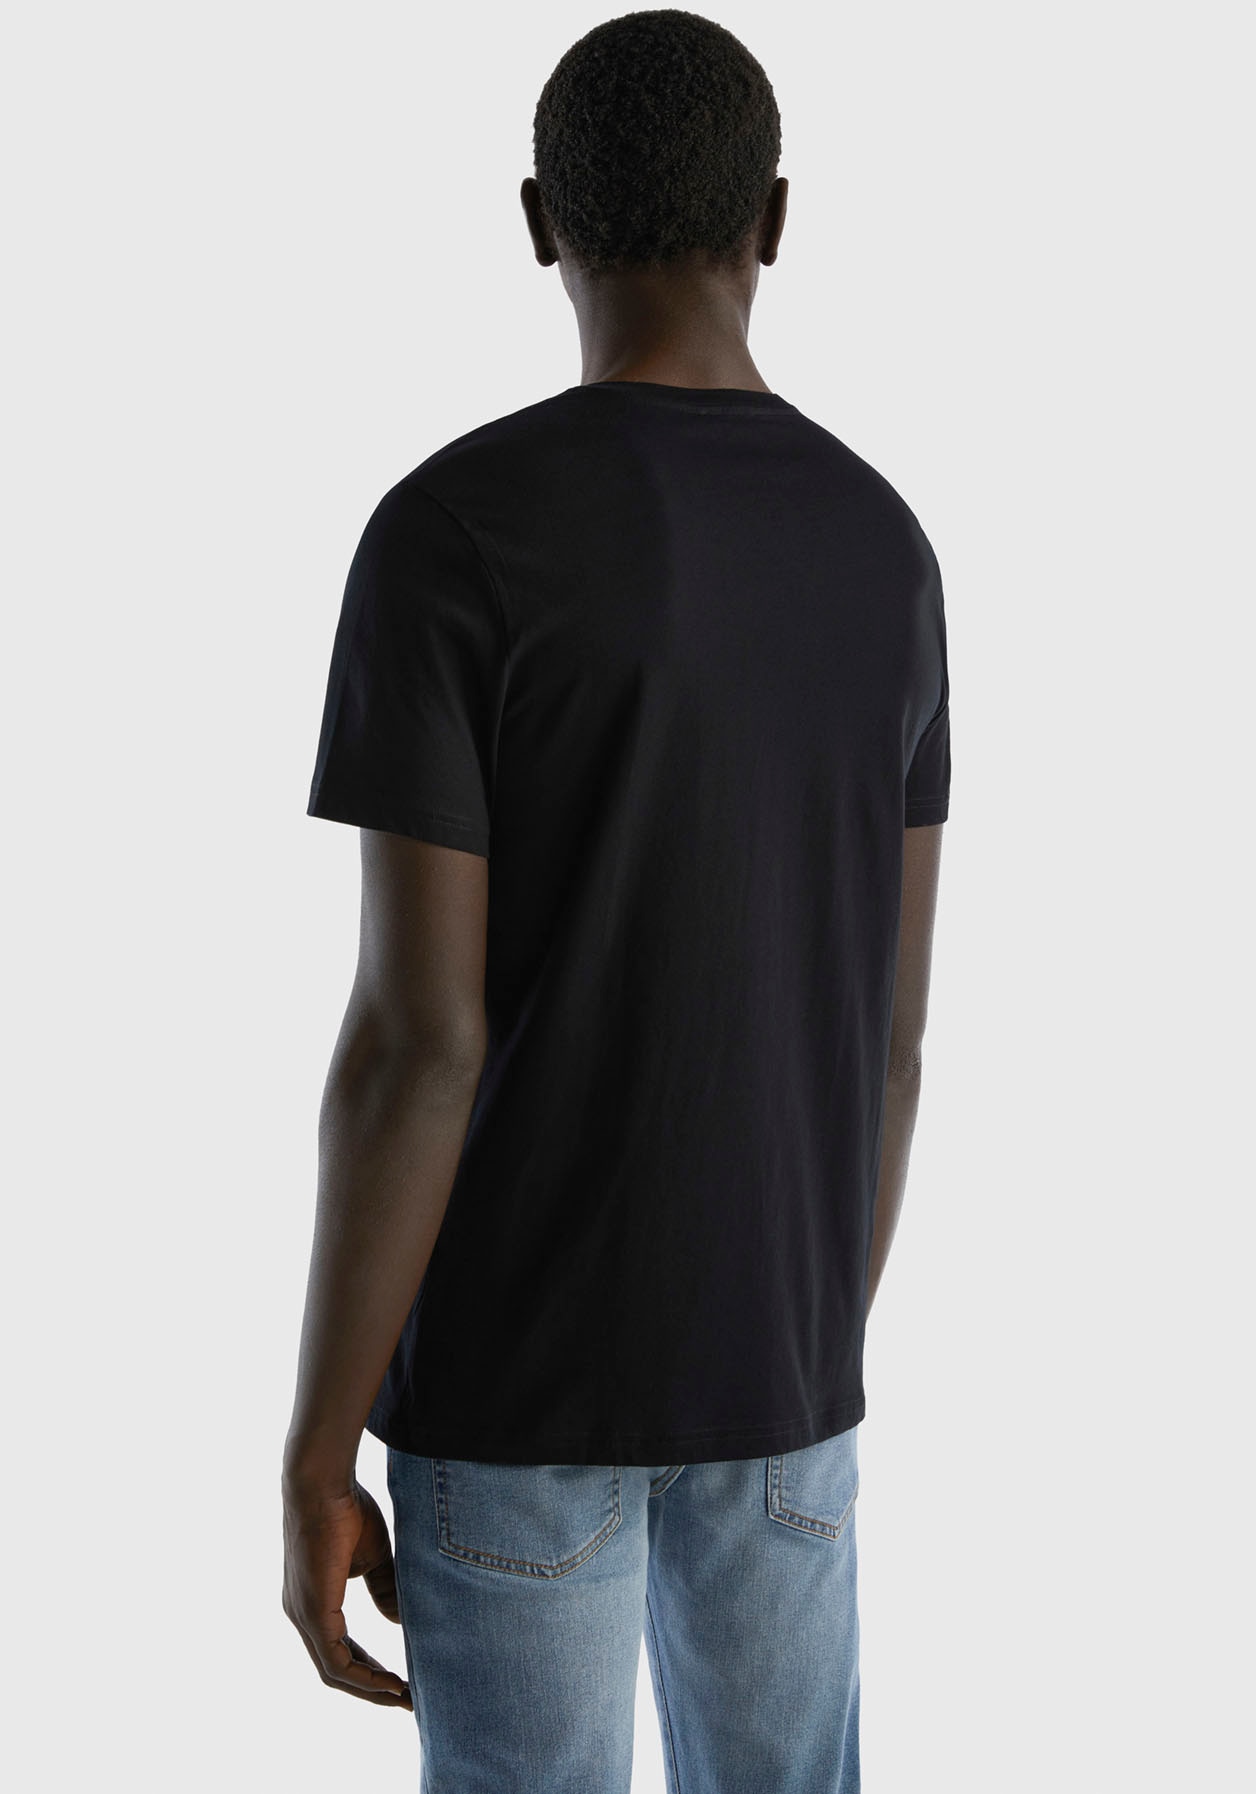 Colors online T-Shirt, United Basic-Form bestellen of in cleaner Benetton